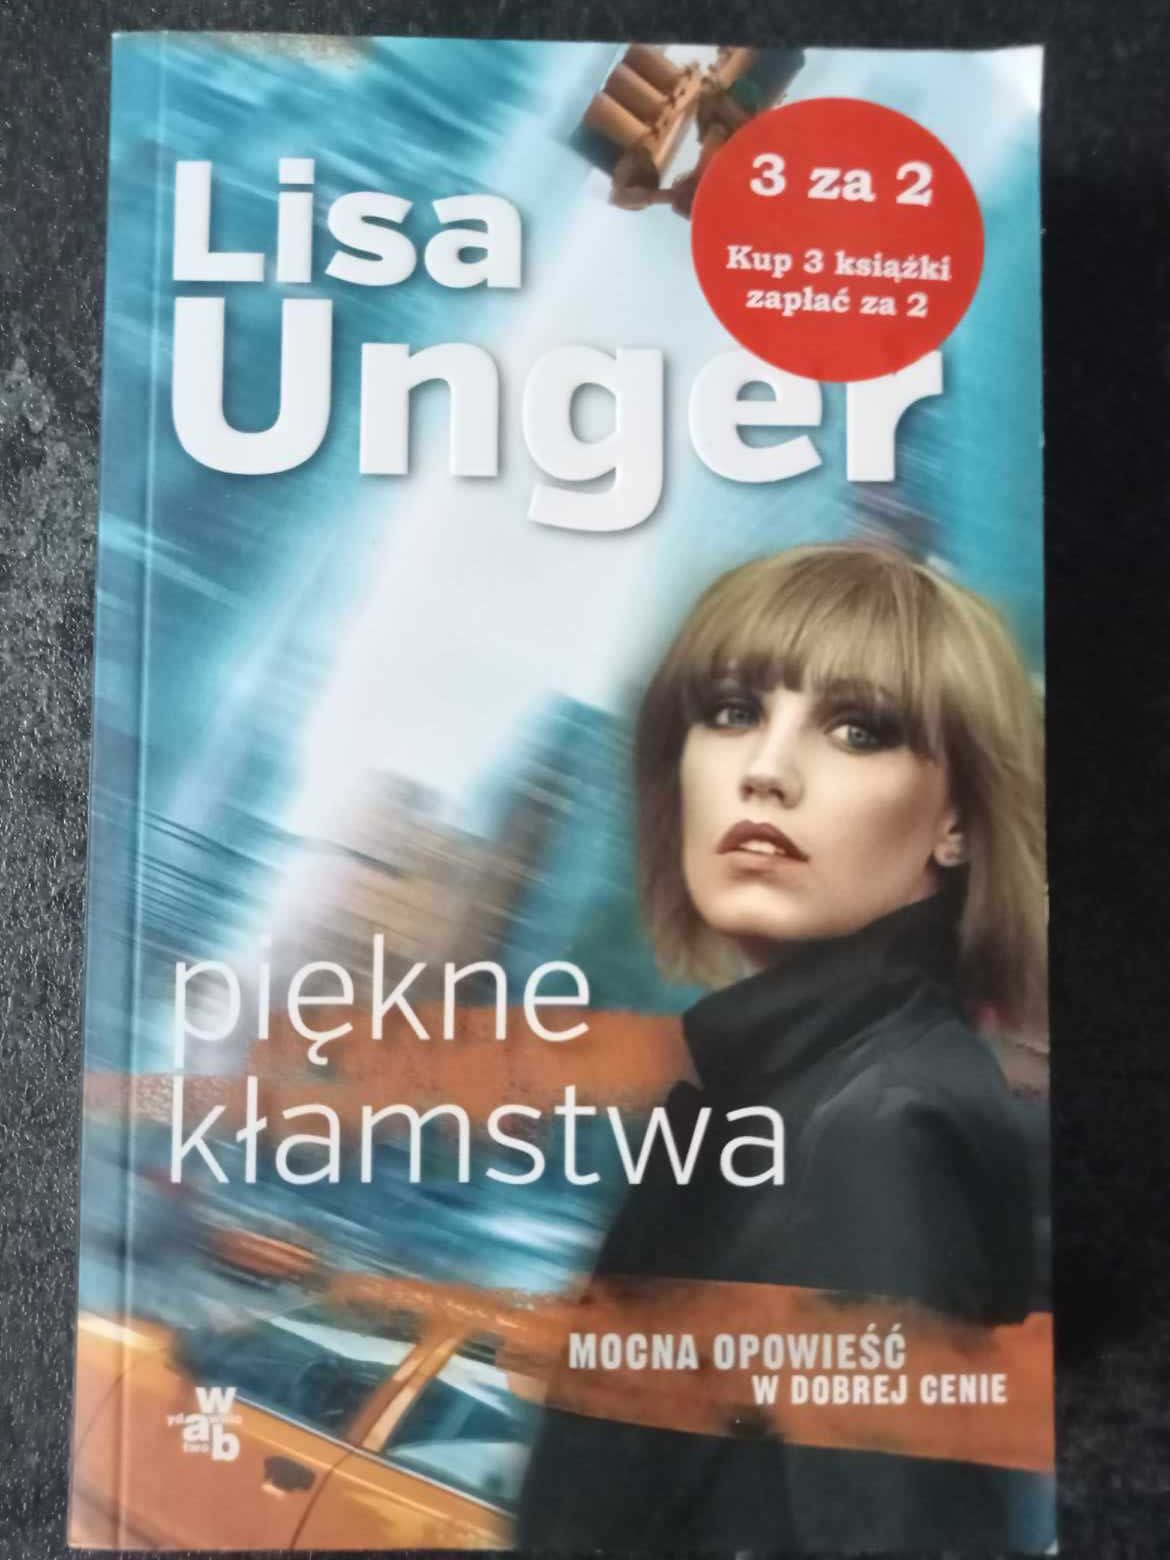 Książka "Piękne kłamstwa" Lisa Unger